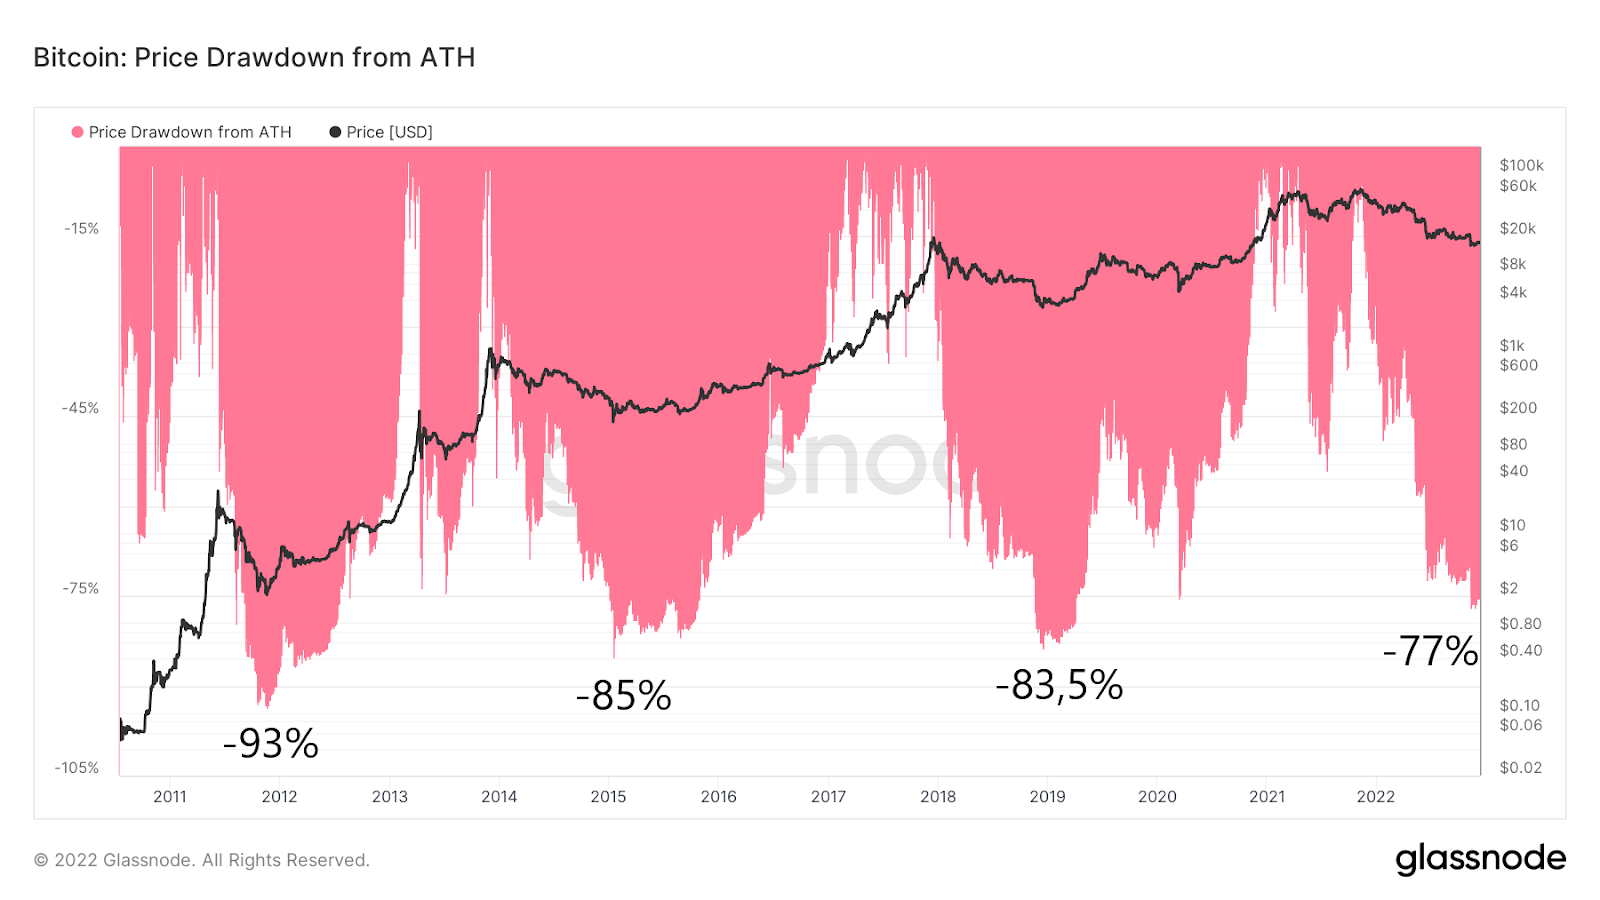 ATH Bitcoin Price Decline